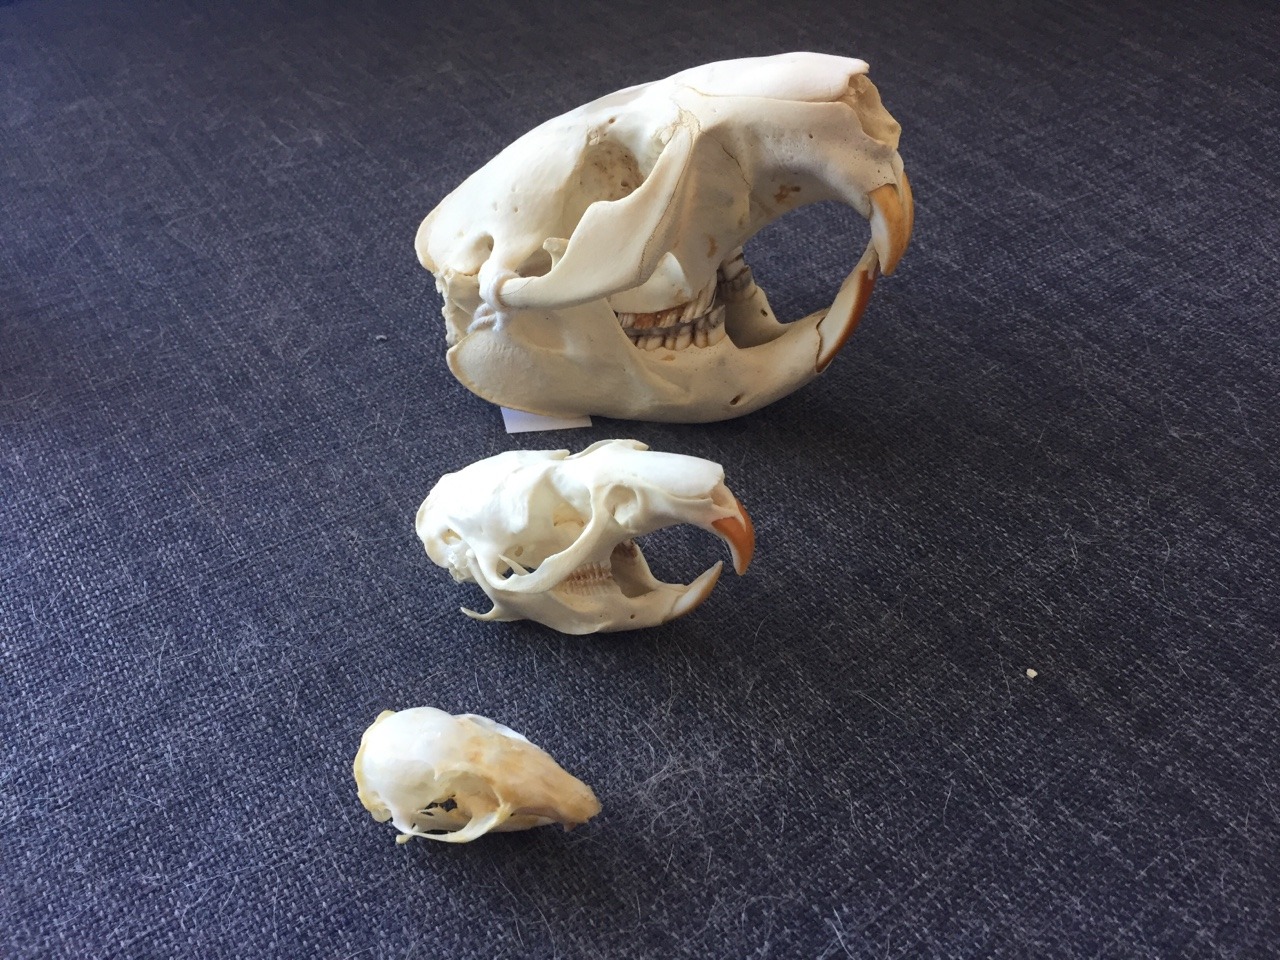 Rodent Skull Identification Chart